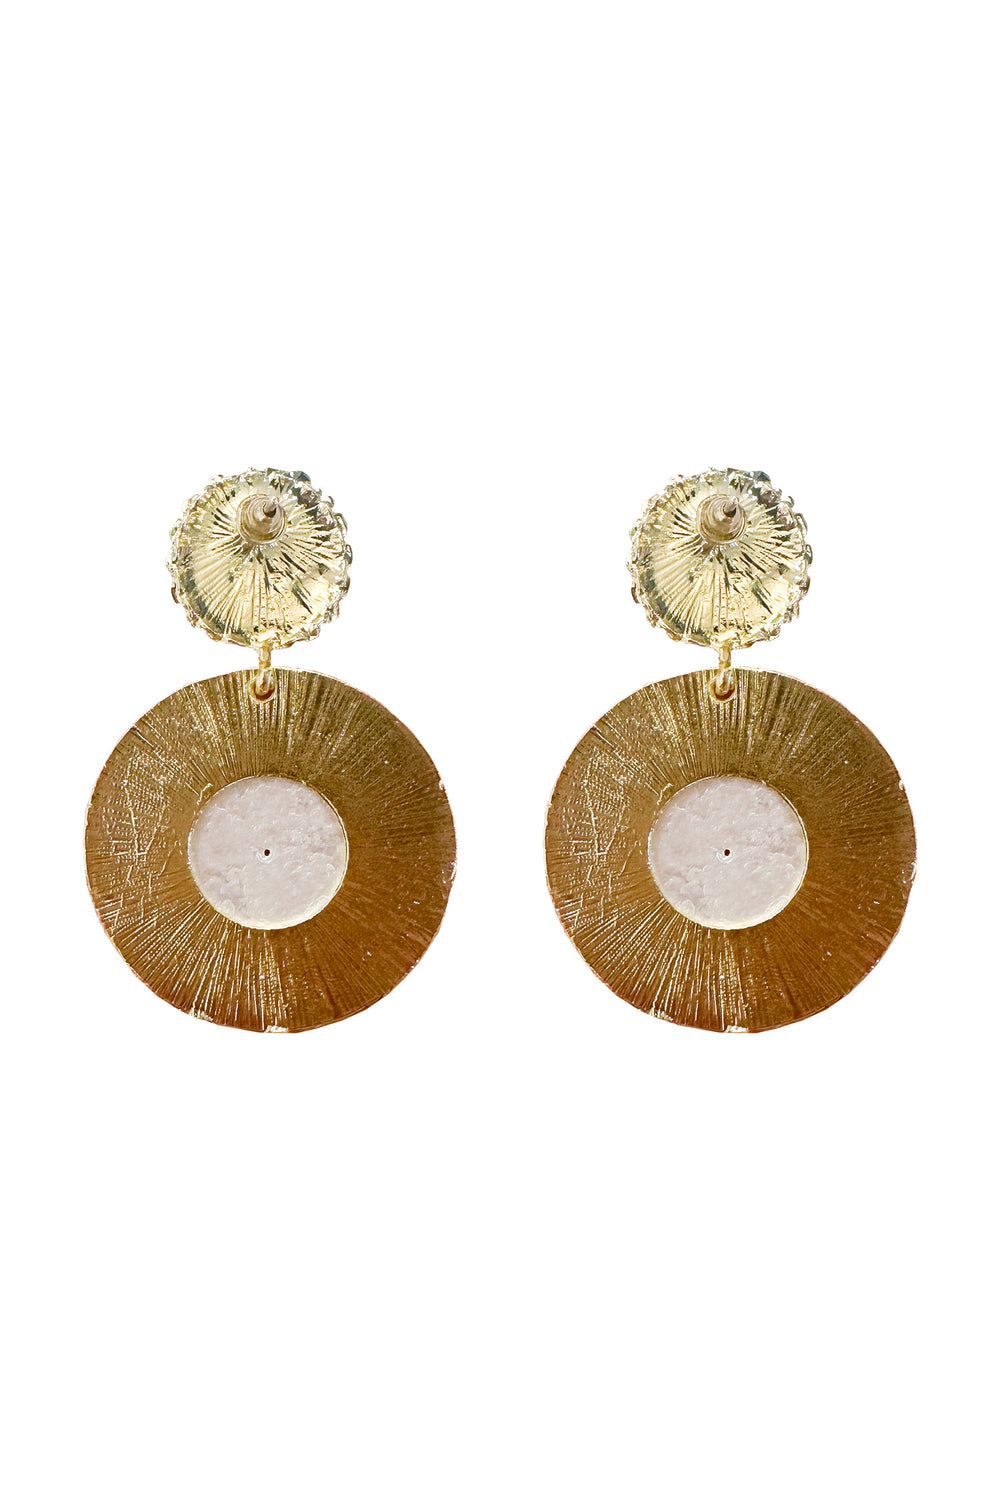 Saffira Pearl Earrings